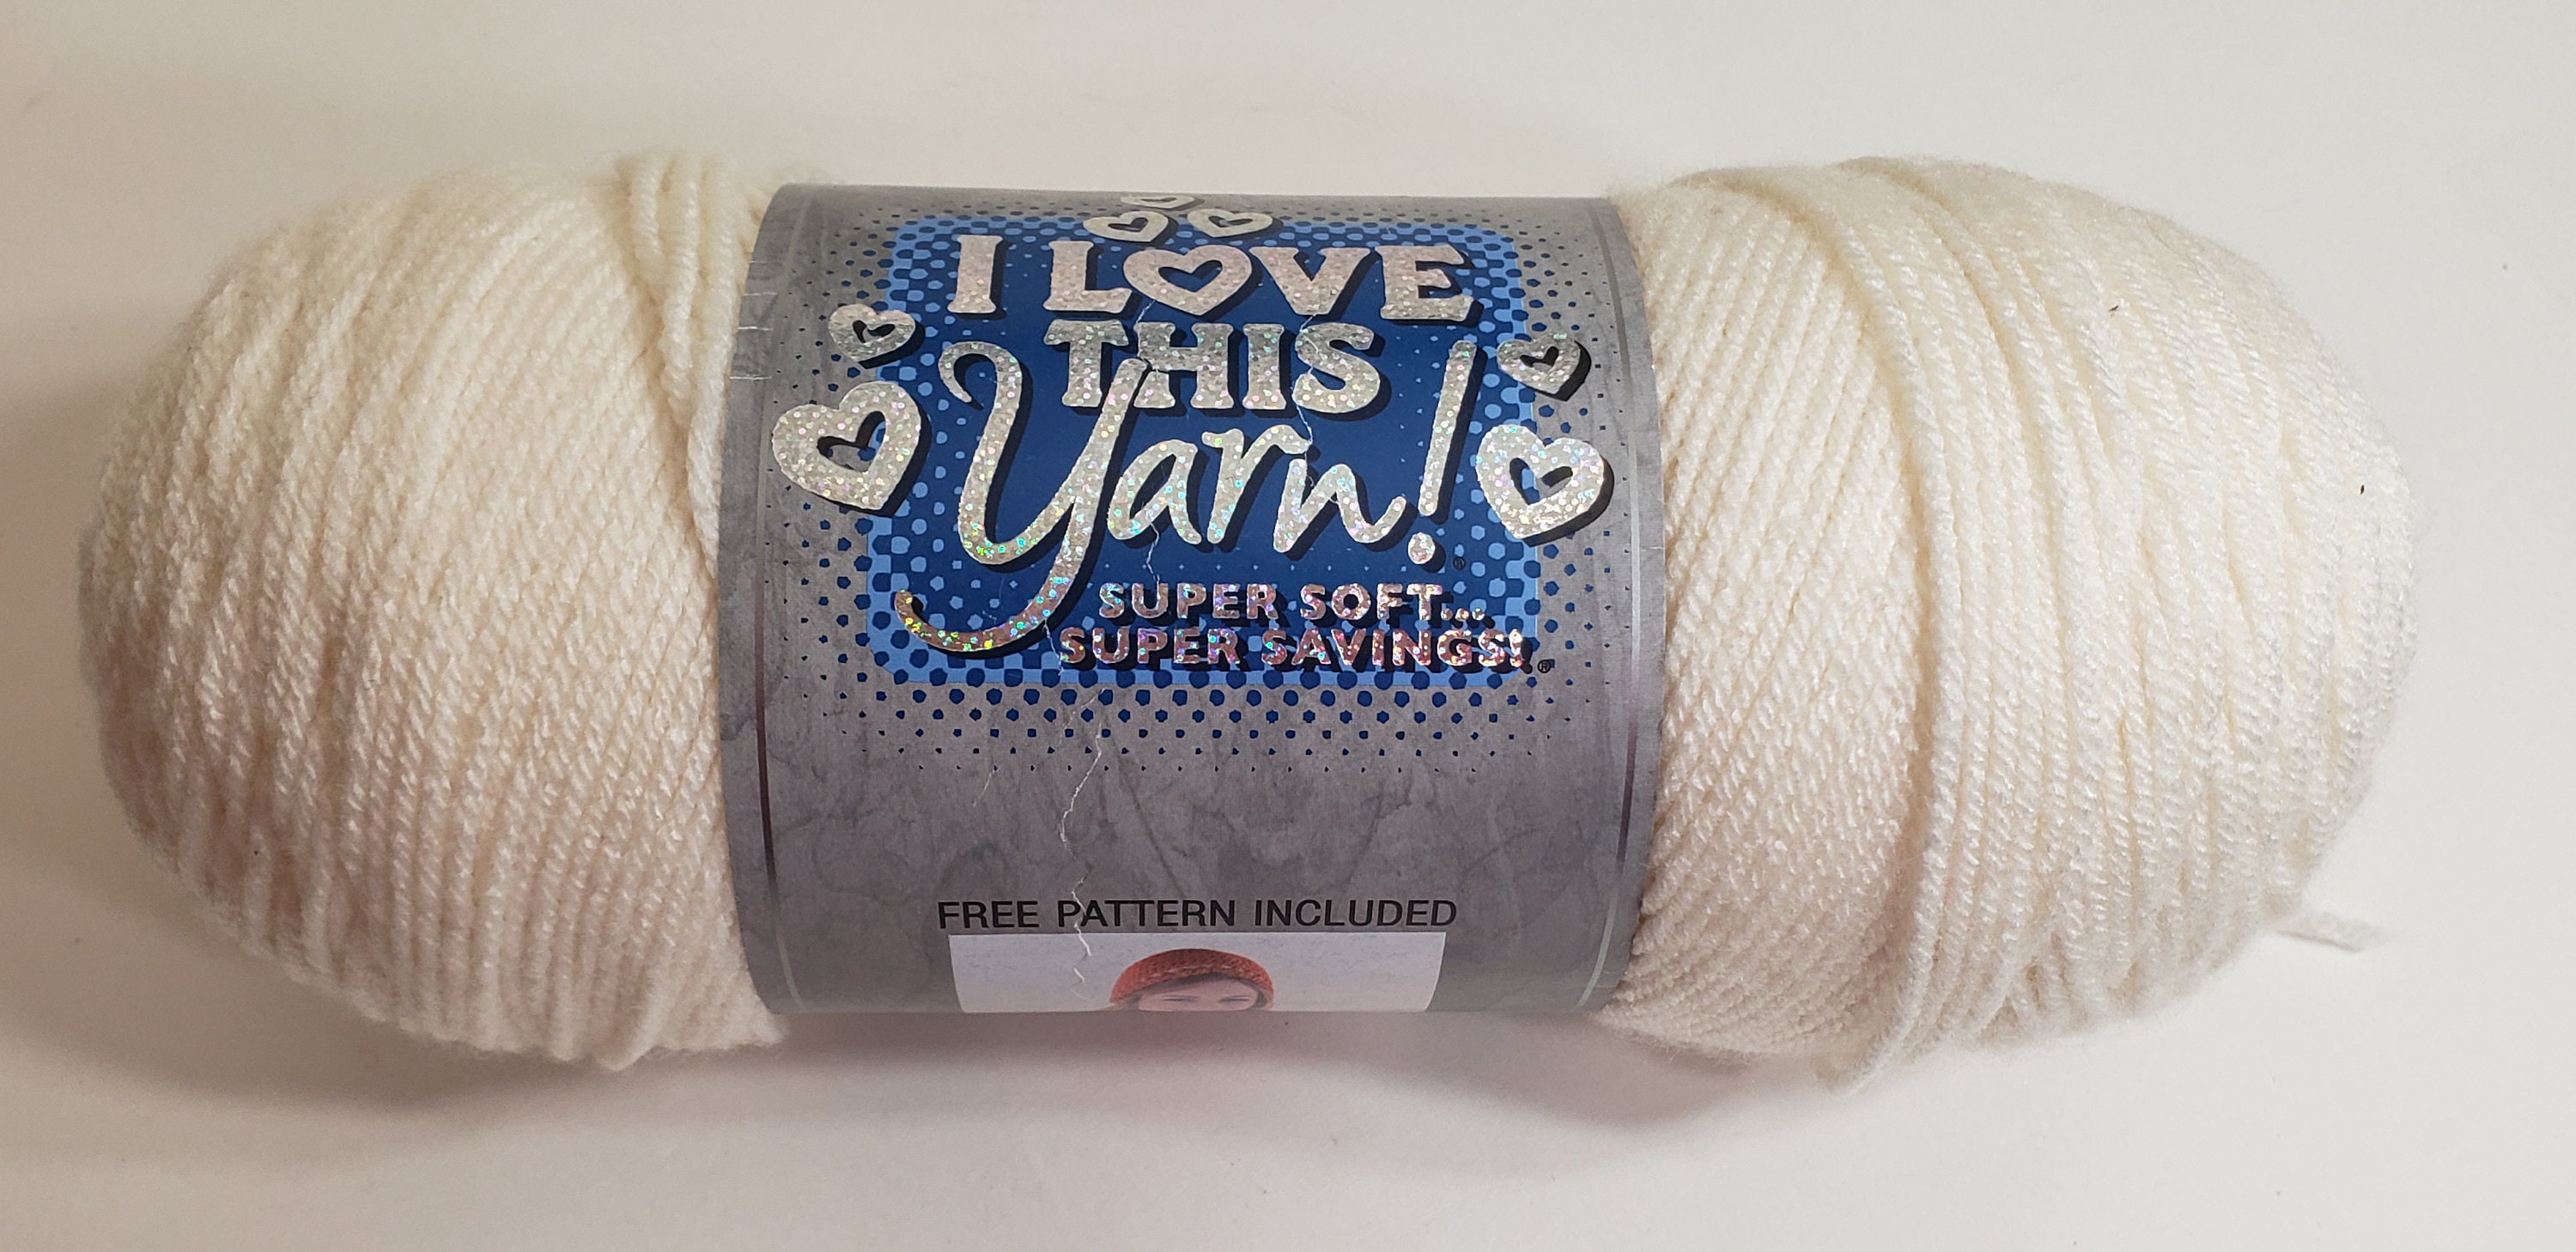 Inscraft 52 Acrylic Yarn Skeins 1820 Yards 52 Colors Acrylic Yarn Skeins 2 Crochet Hooks 2 Weaving Needles 10 Stitch Markers 1 Bag Yarn for Crocheting